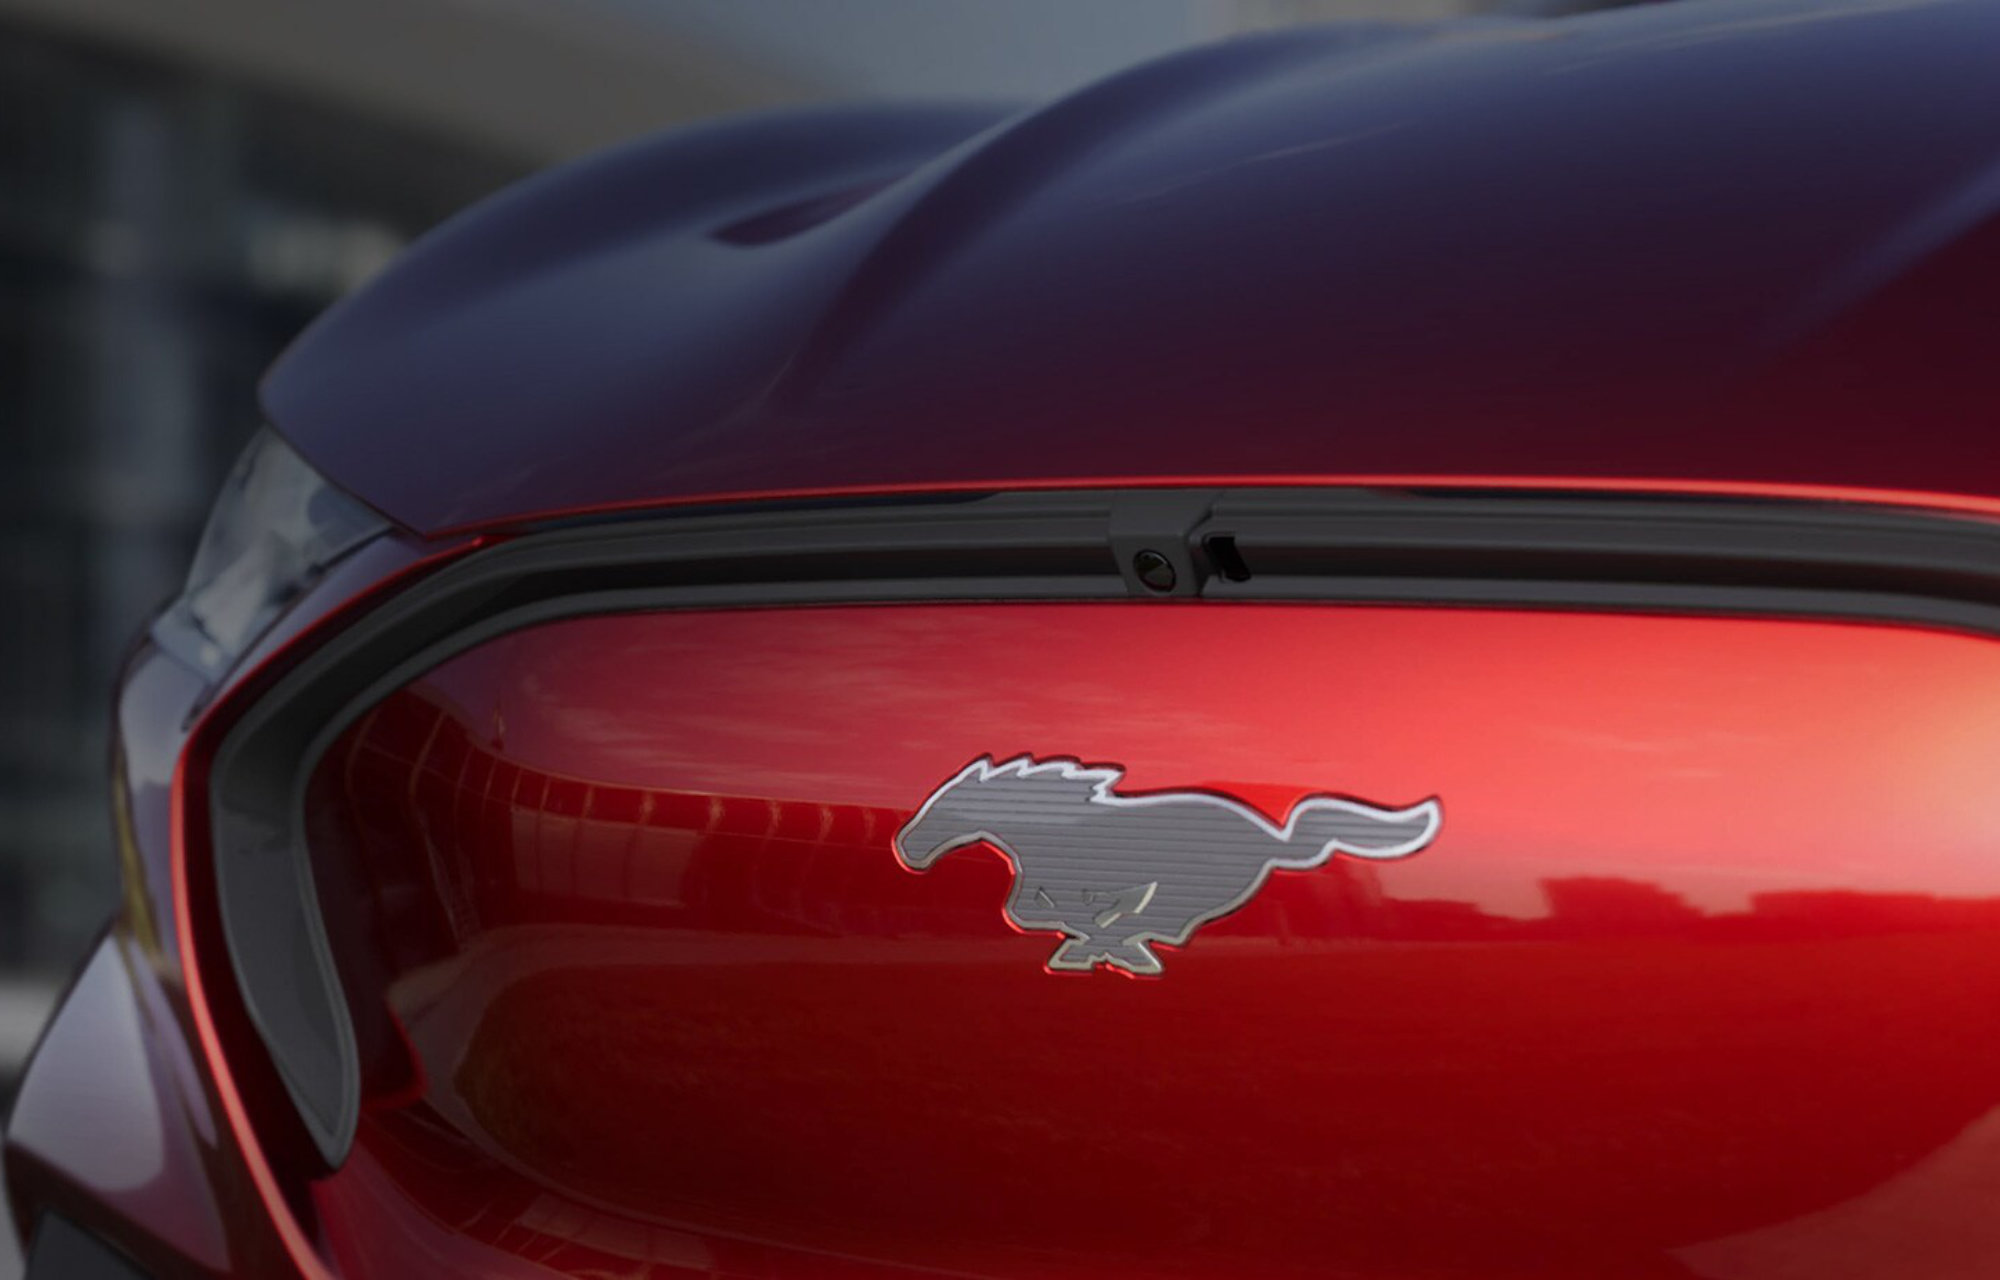 Mustang Mach-E logo